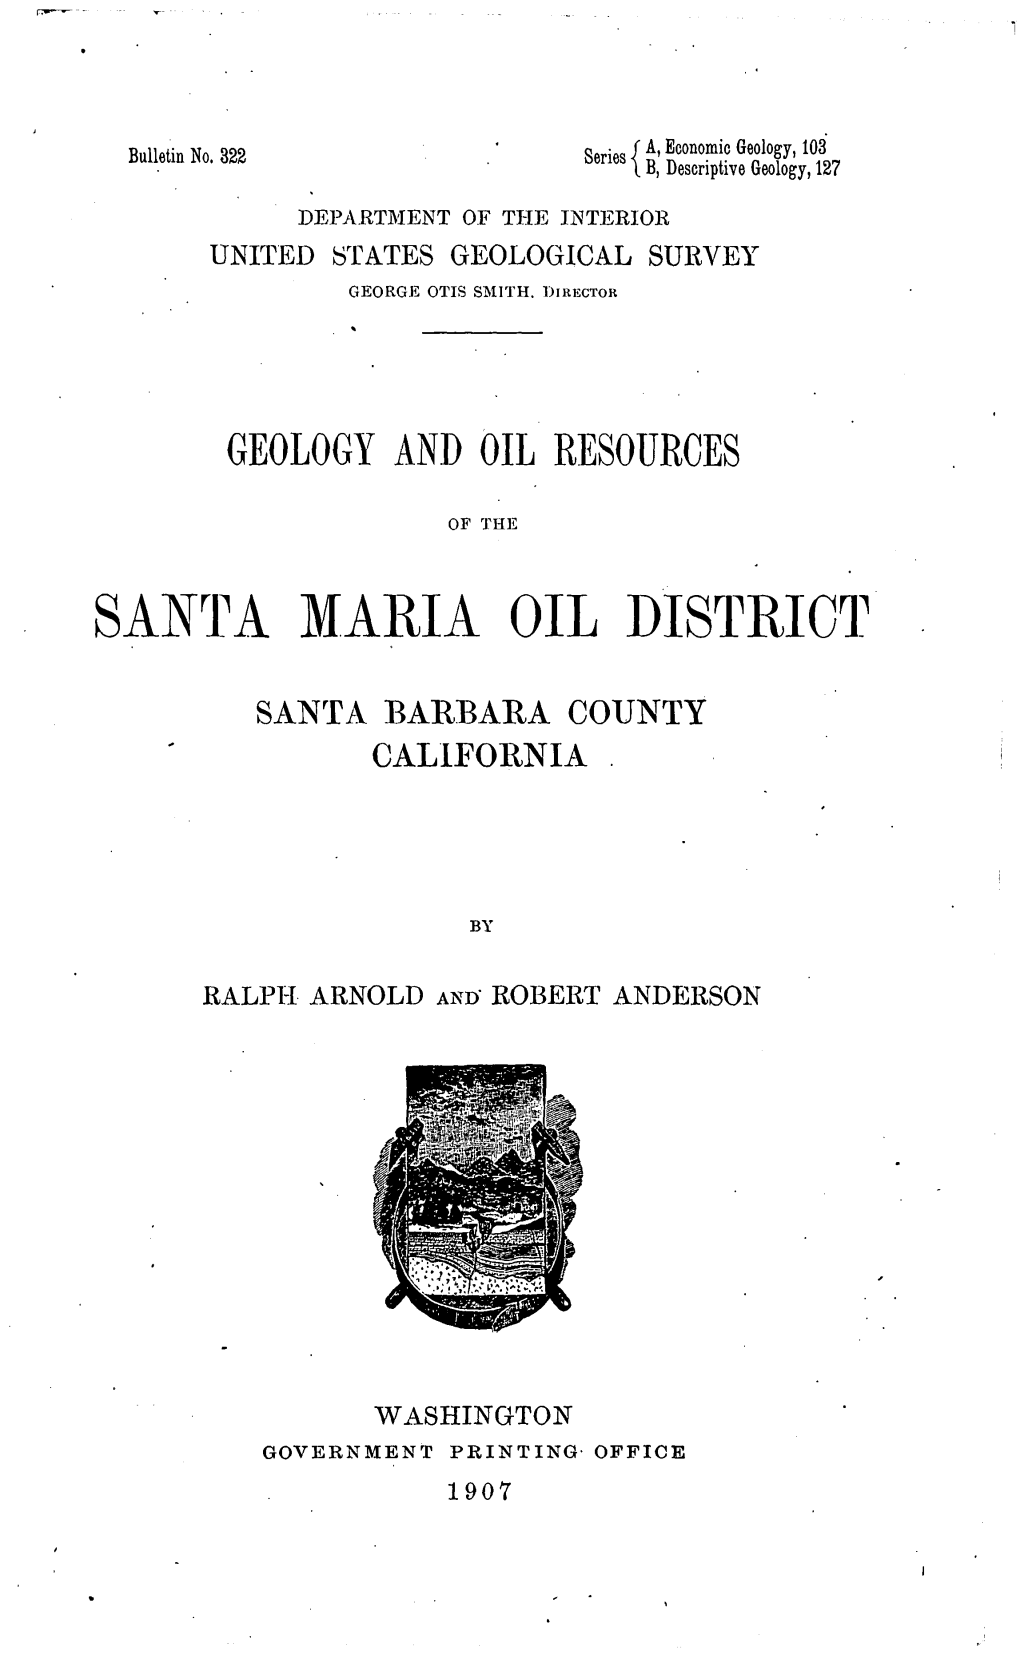 Santa Maria Oil District